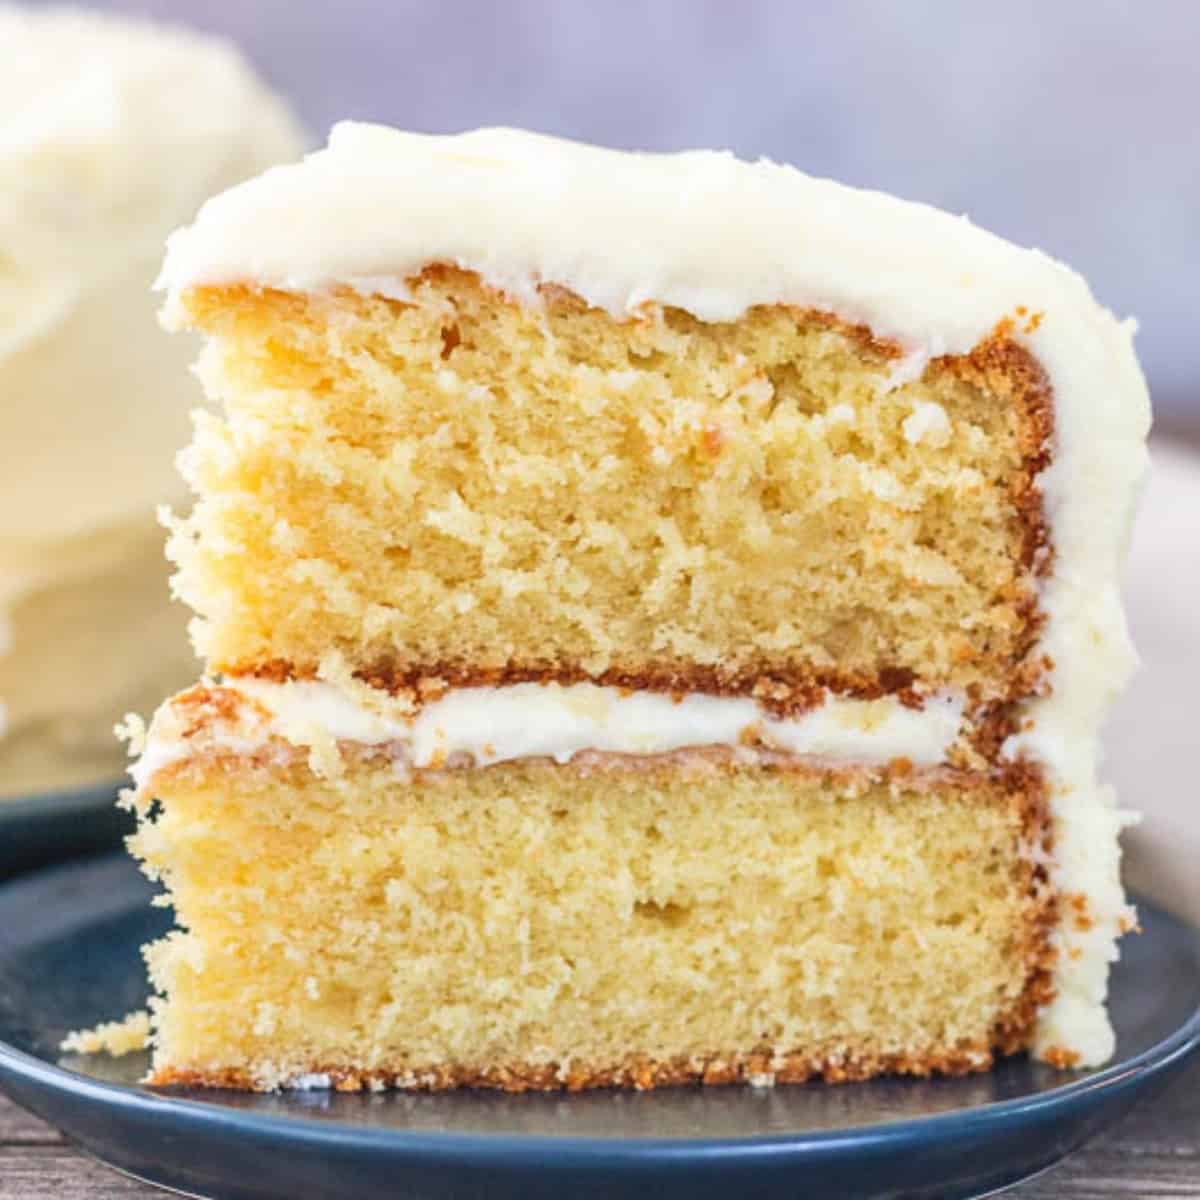 5 Cake Recipes You Need To Make - Food Storage Moms